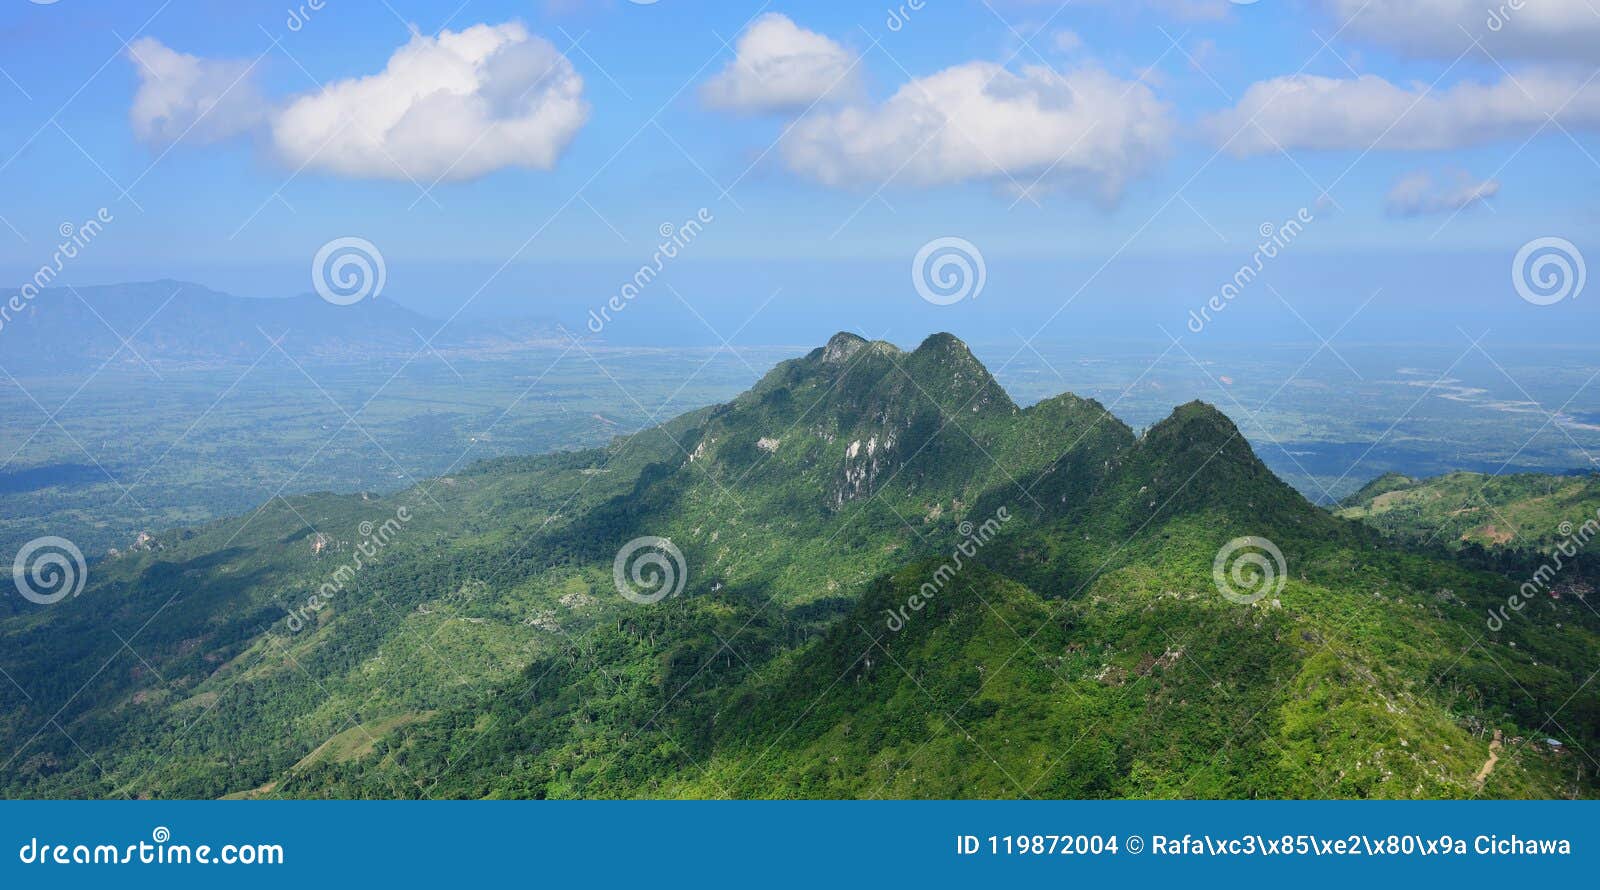 landscape on the green mountain range over haiti